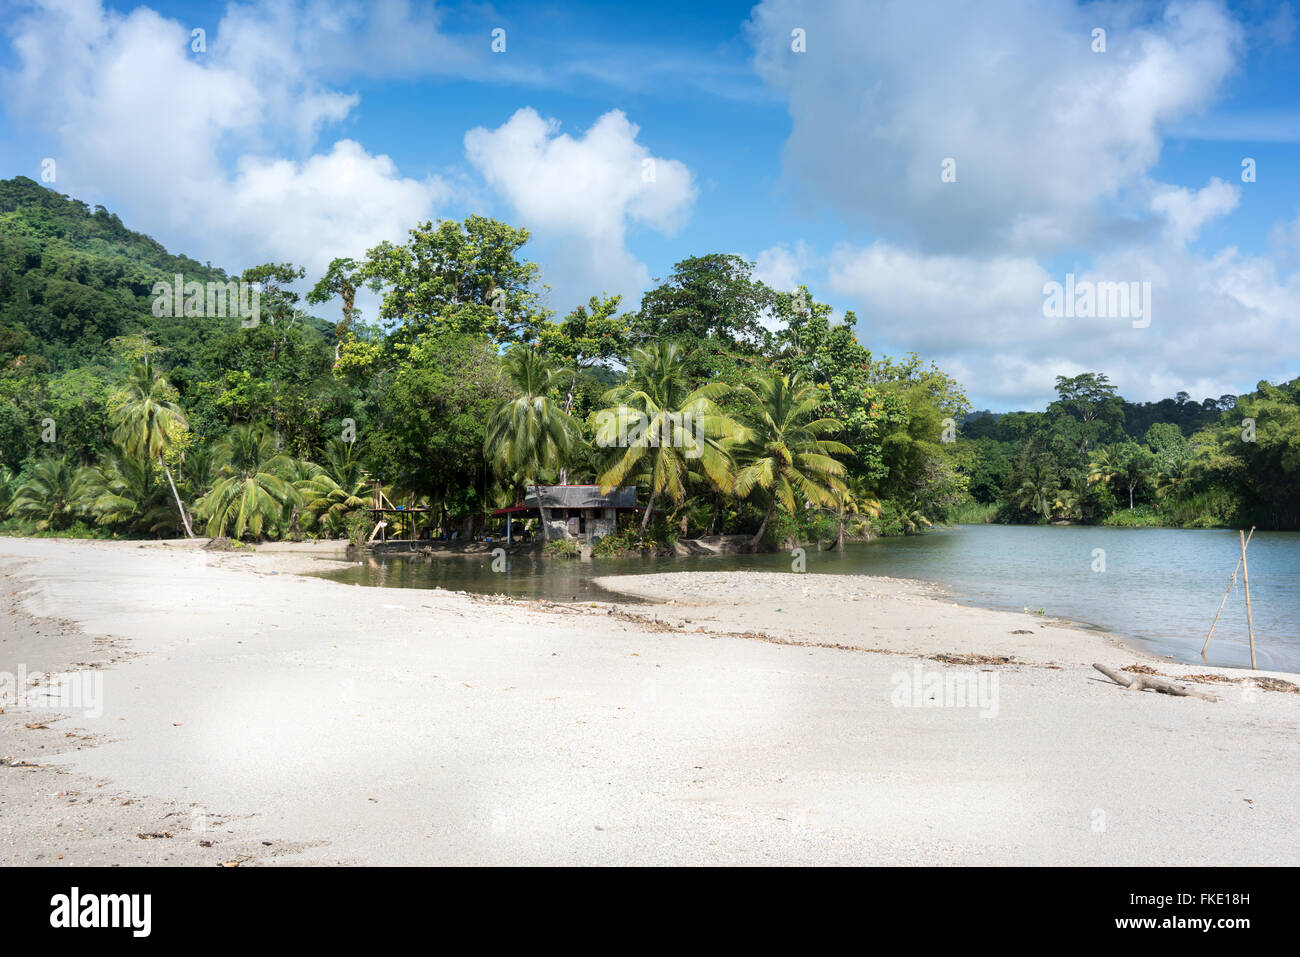 Vista panoramica della spiaggia esotica con palme e la bassa marea contro il cielo nuvoloso, Trinidad, Trinidad e Tobago Foto Stock